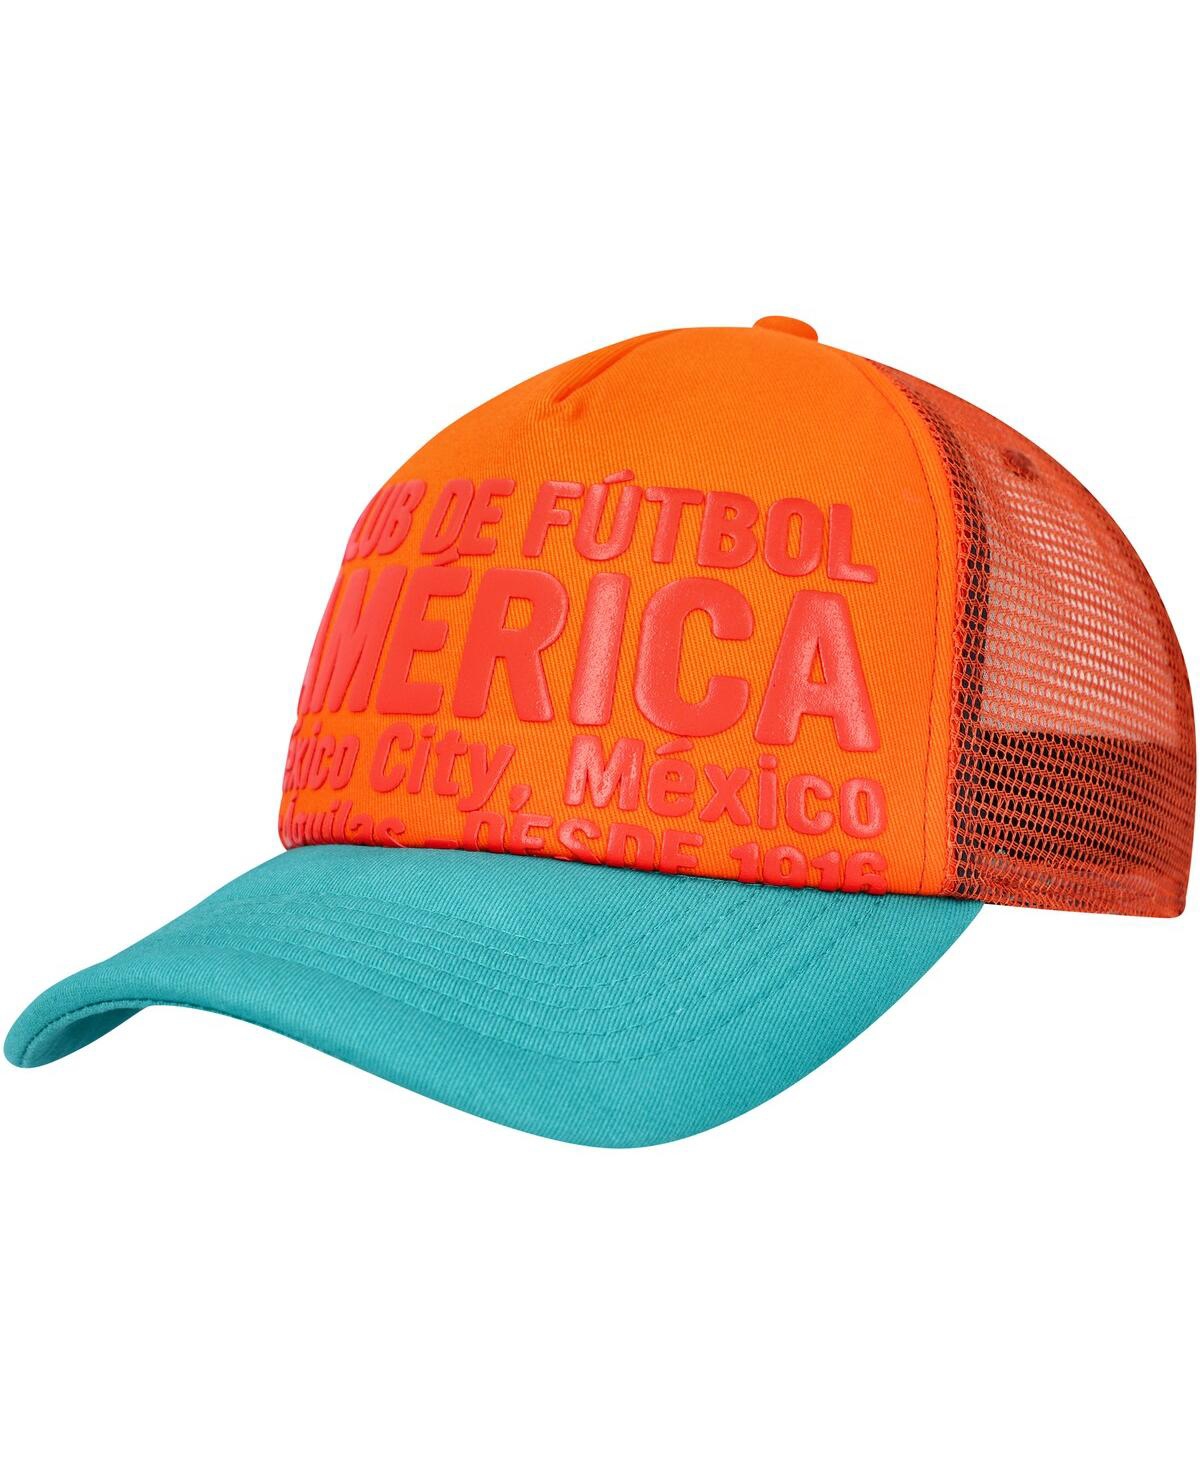 Shop Fan Ink Men's Orange Club America Club Gold Adjustable Hat